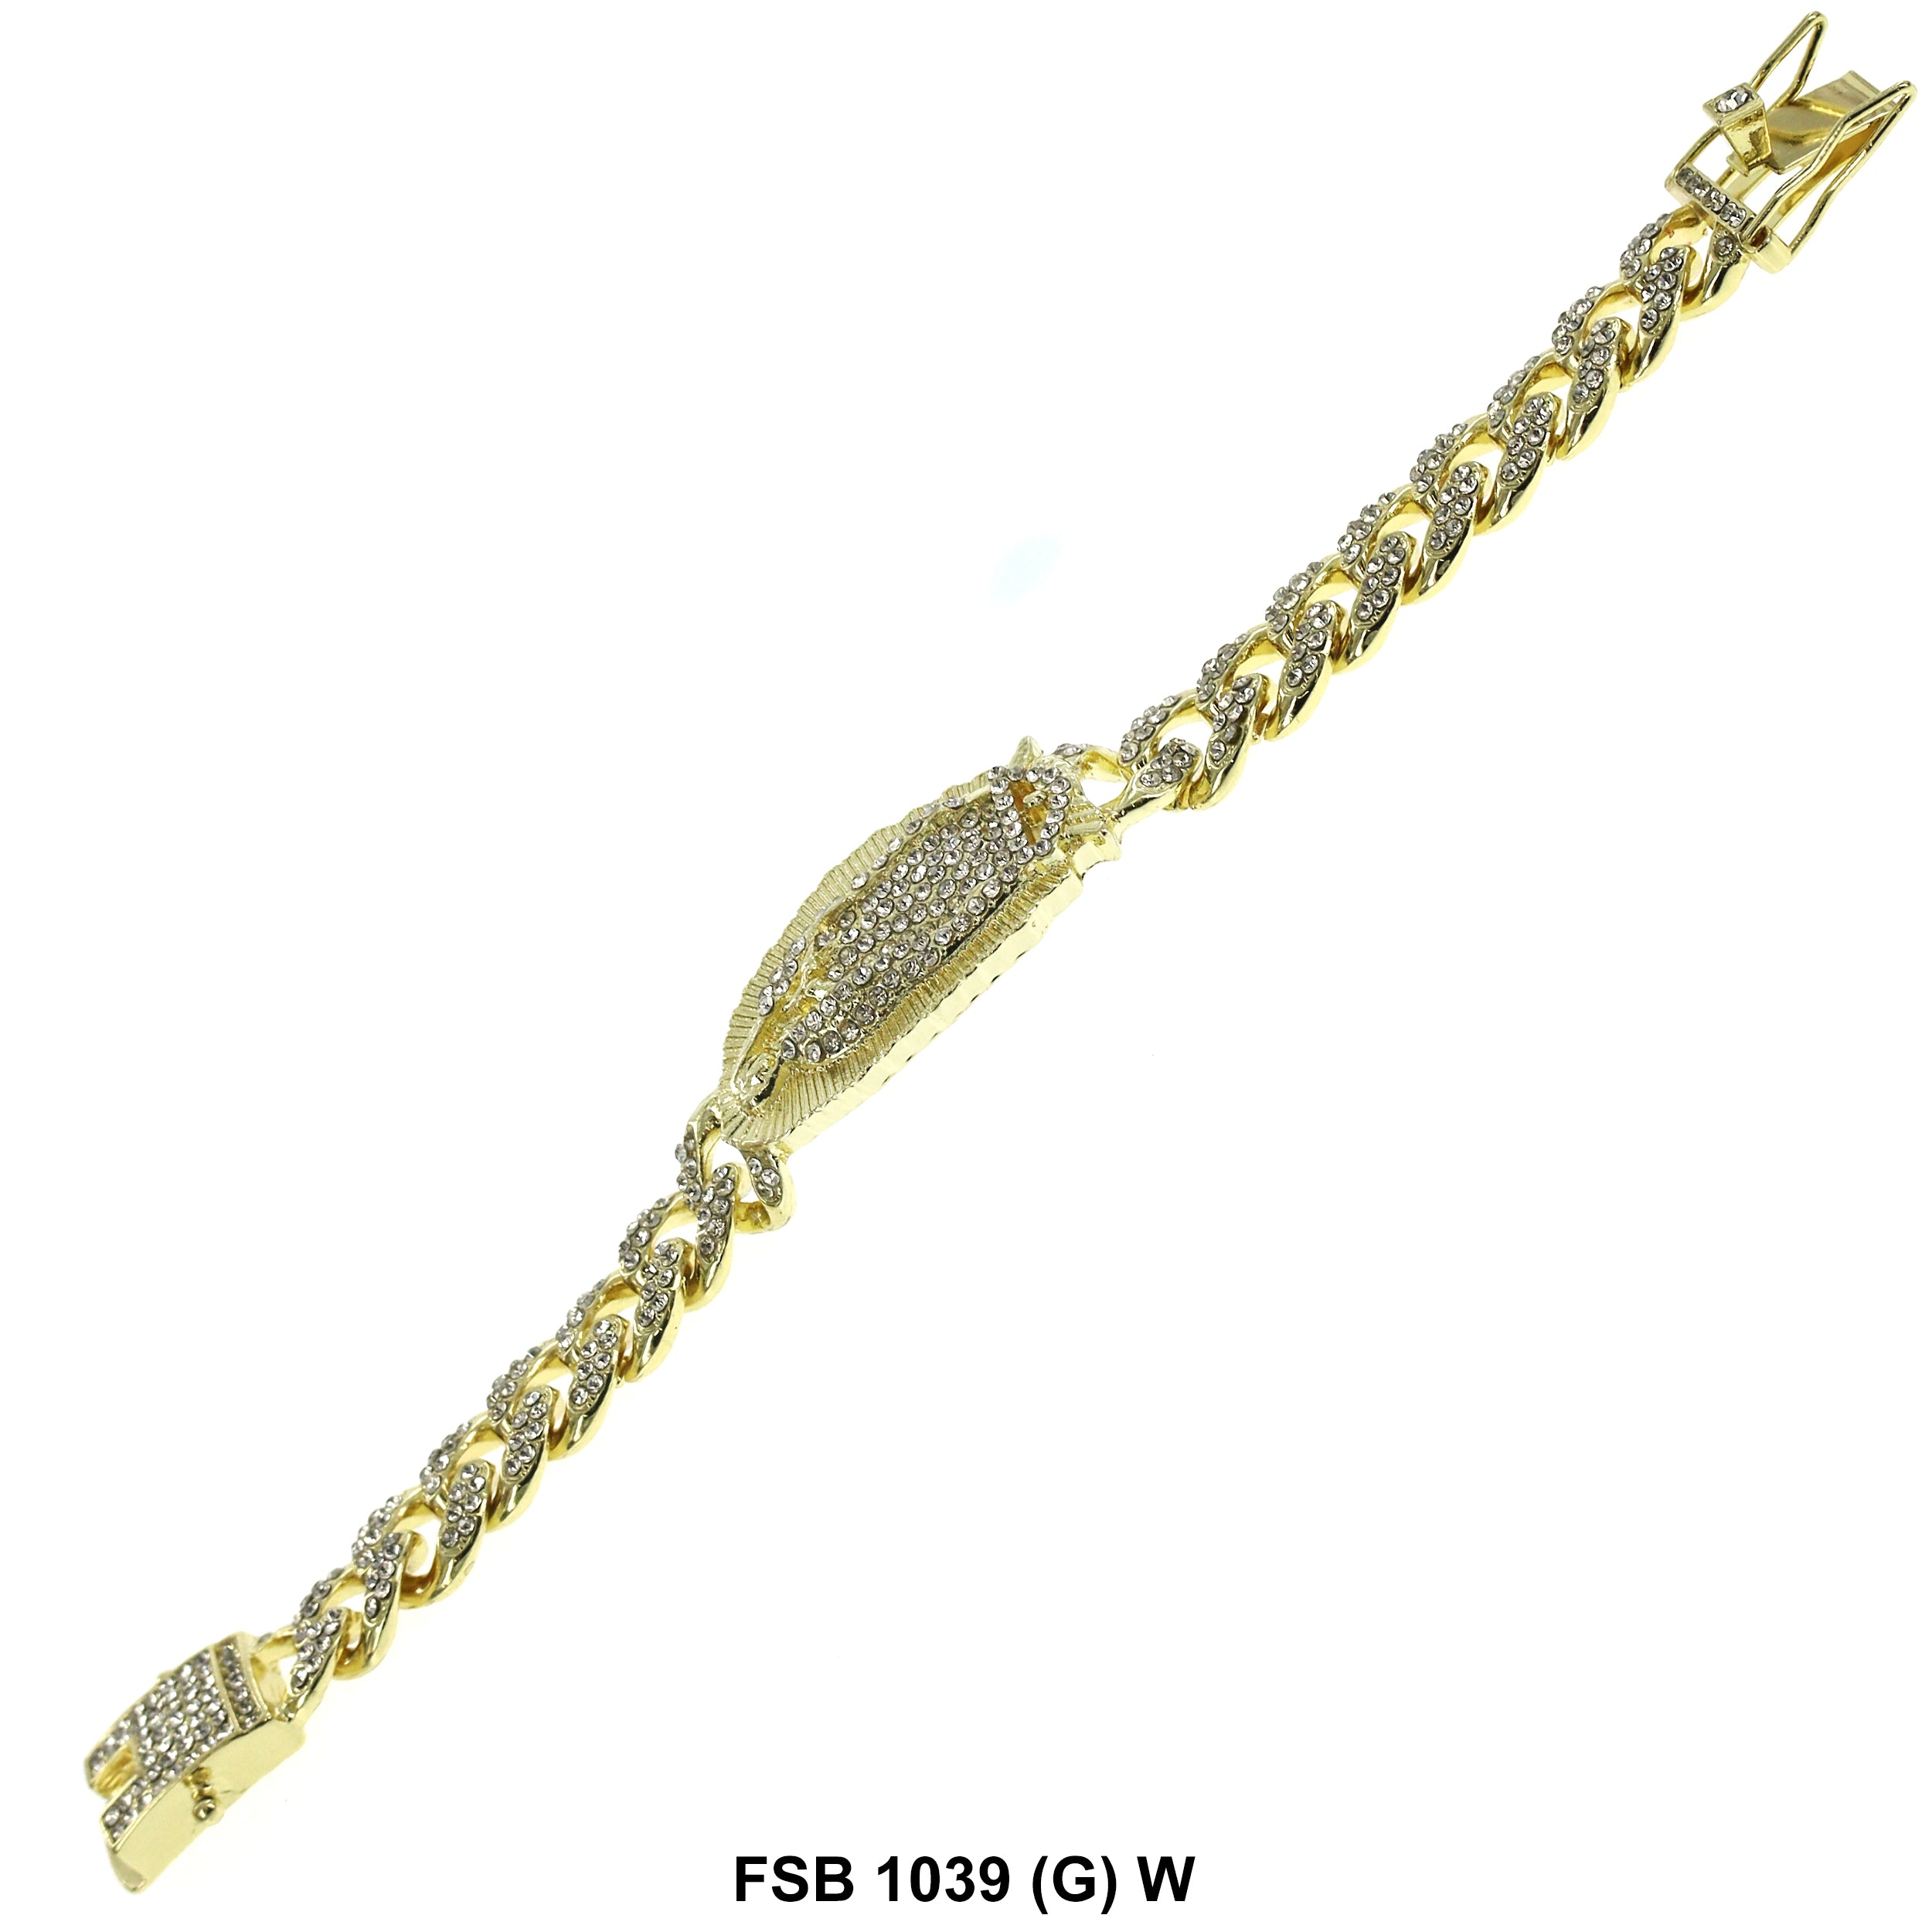 Guadalupe Stones Bracelet FSB 1039 (G) W